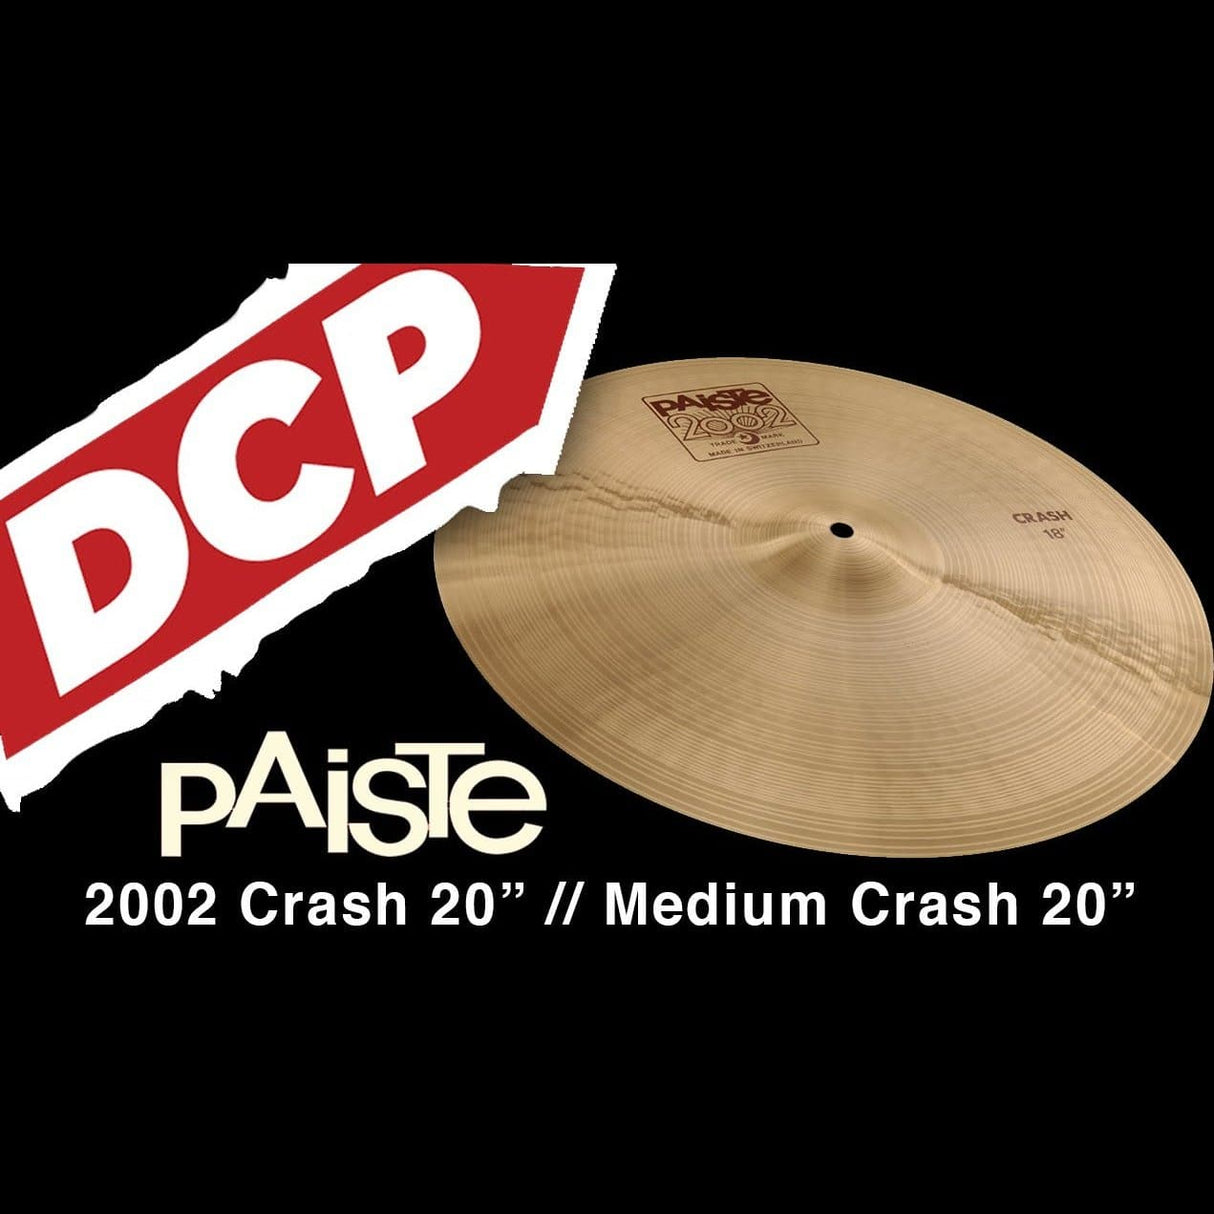 Paiste 2002 Crash Cymbal 20"